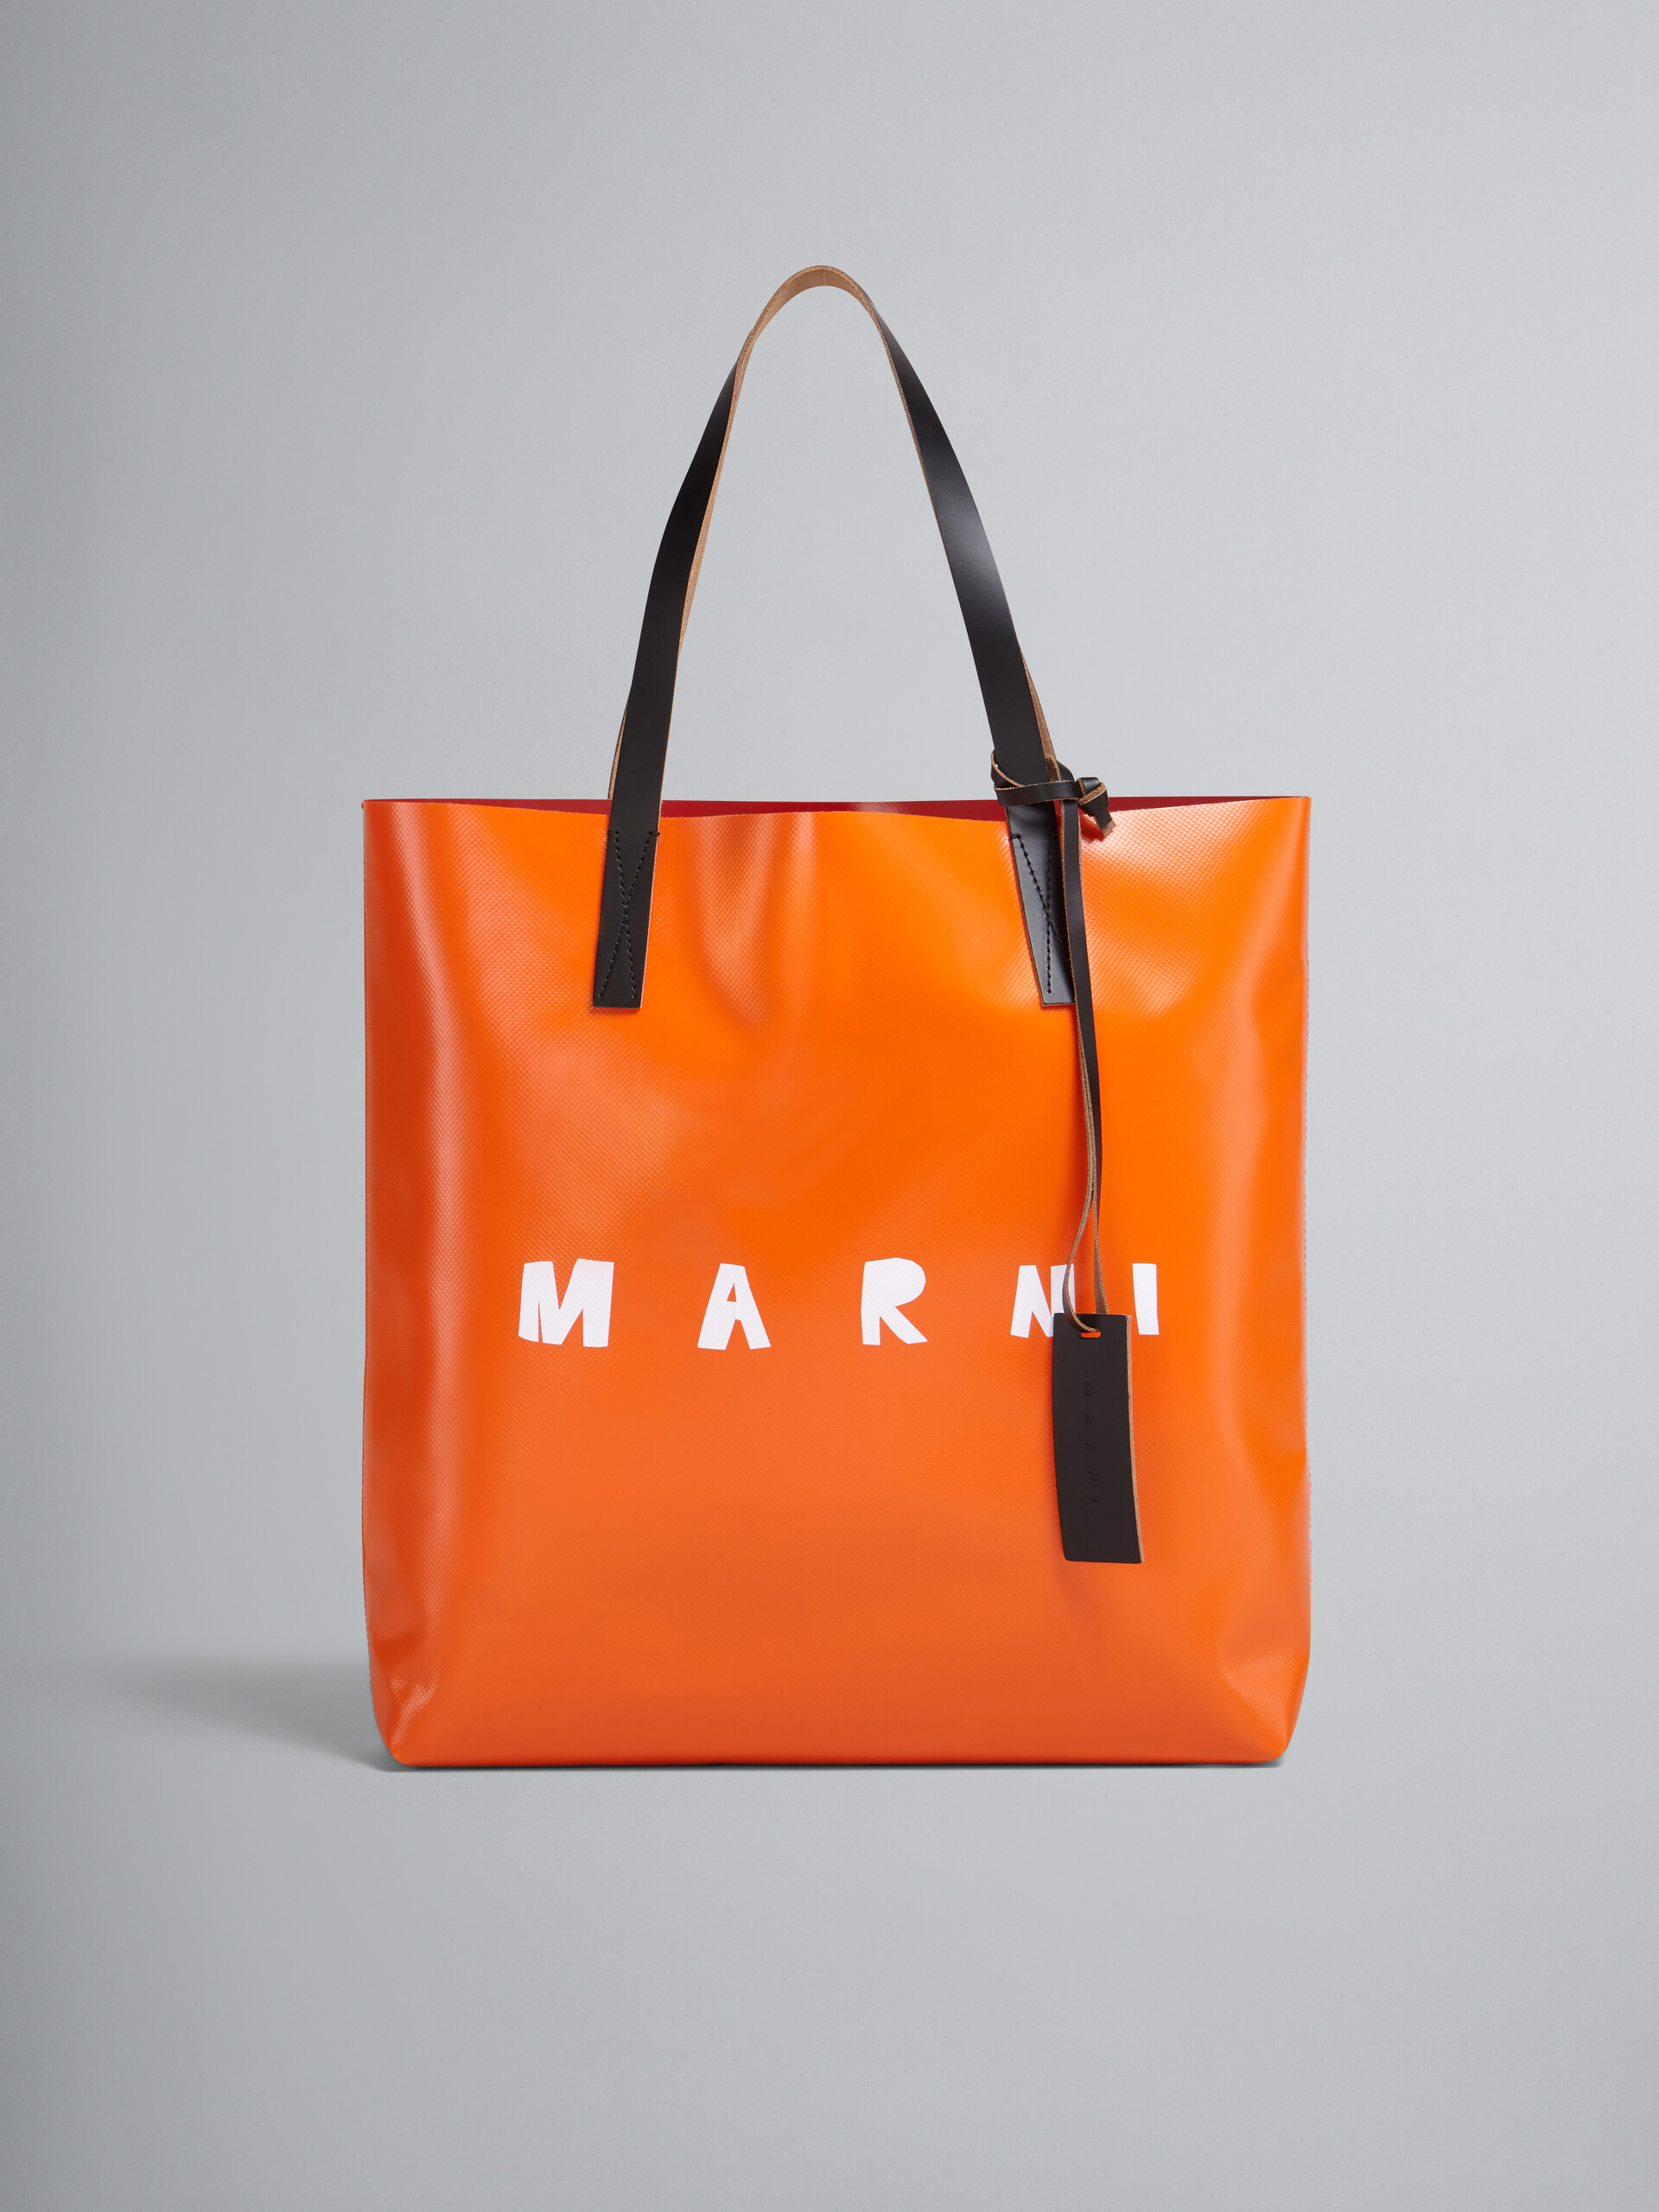 Borsa shopping in PVC con manici in pelle e logo Marni fuxia e arancione - Borse shopping - Image 1